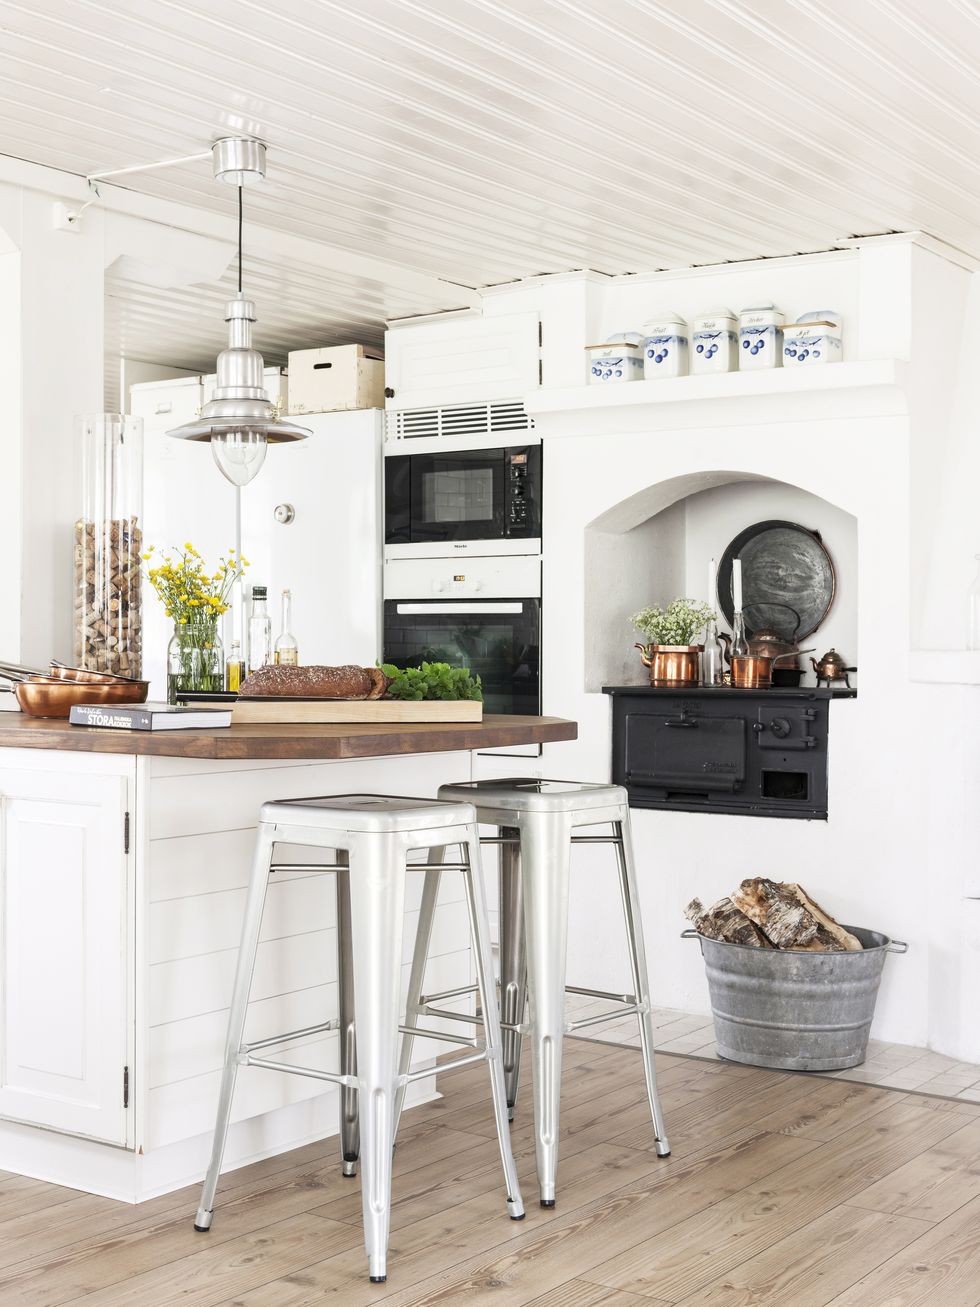 delikatissen estilo escandinavo decoración cocina cocina sueca cocina nórdica cocina landstil cocina country cocina clásica cocina blanca 